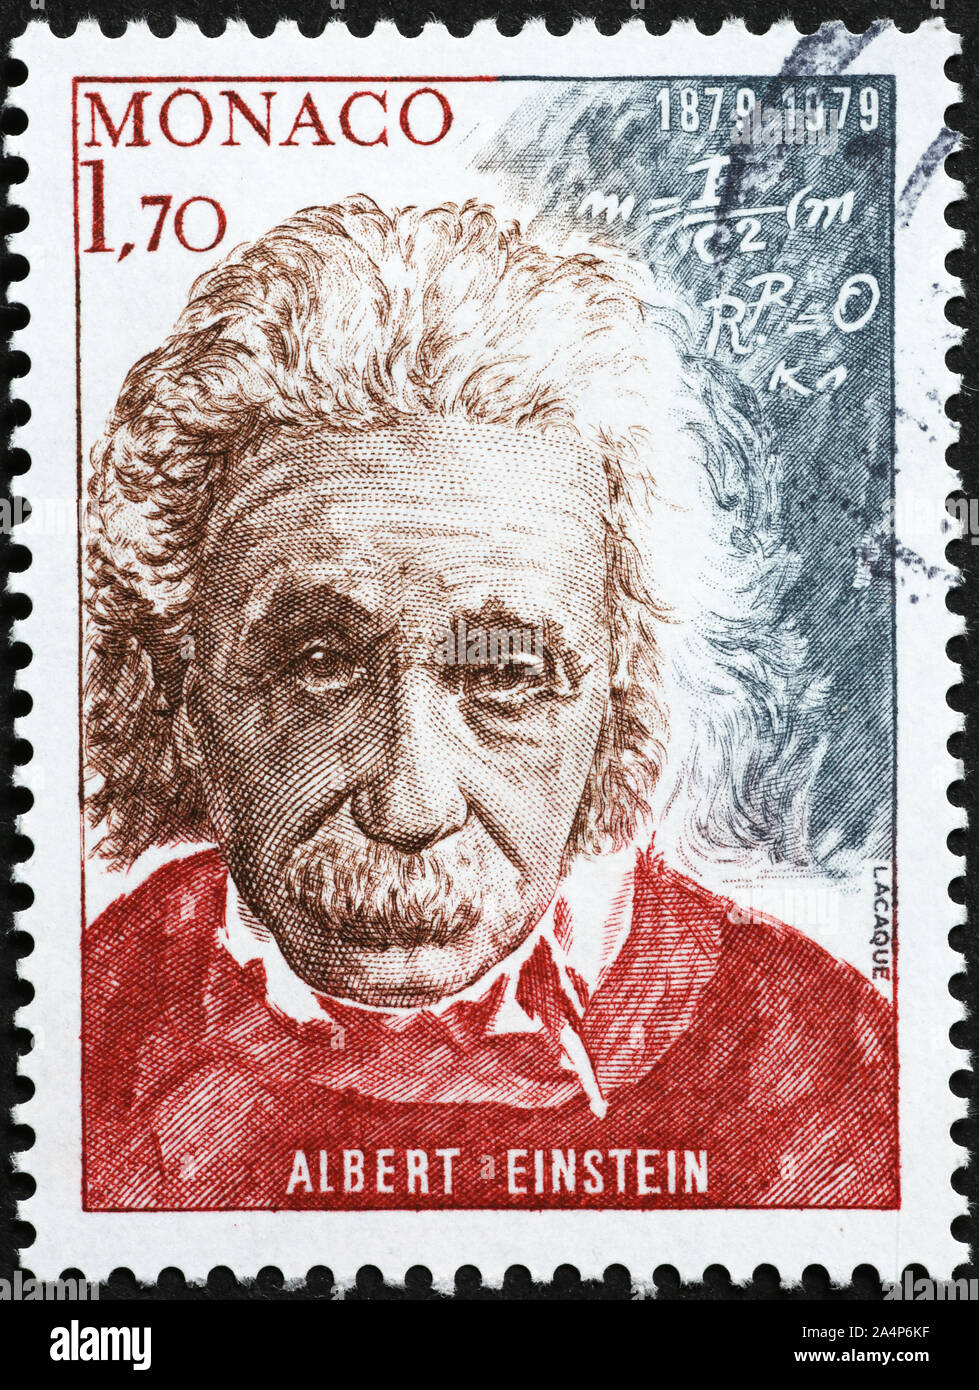 Albert Einstein on postage stamp of Monaco Stock Photo